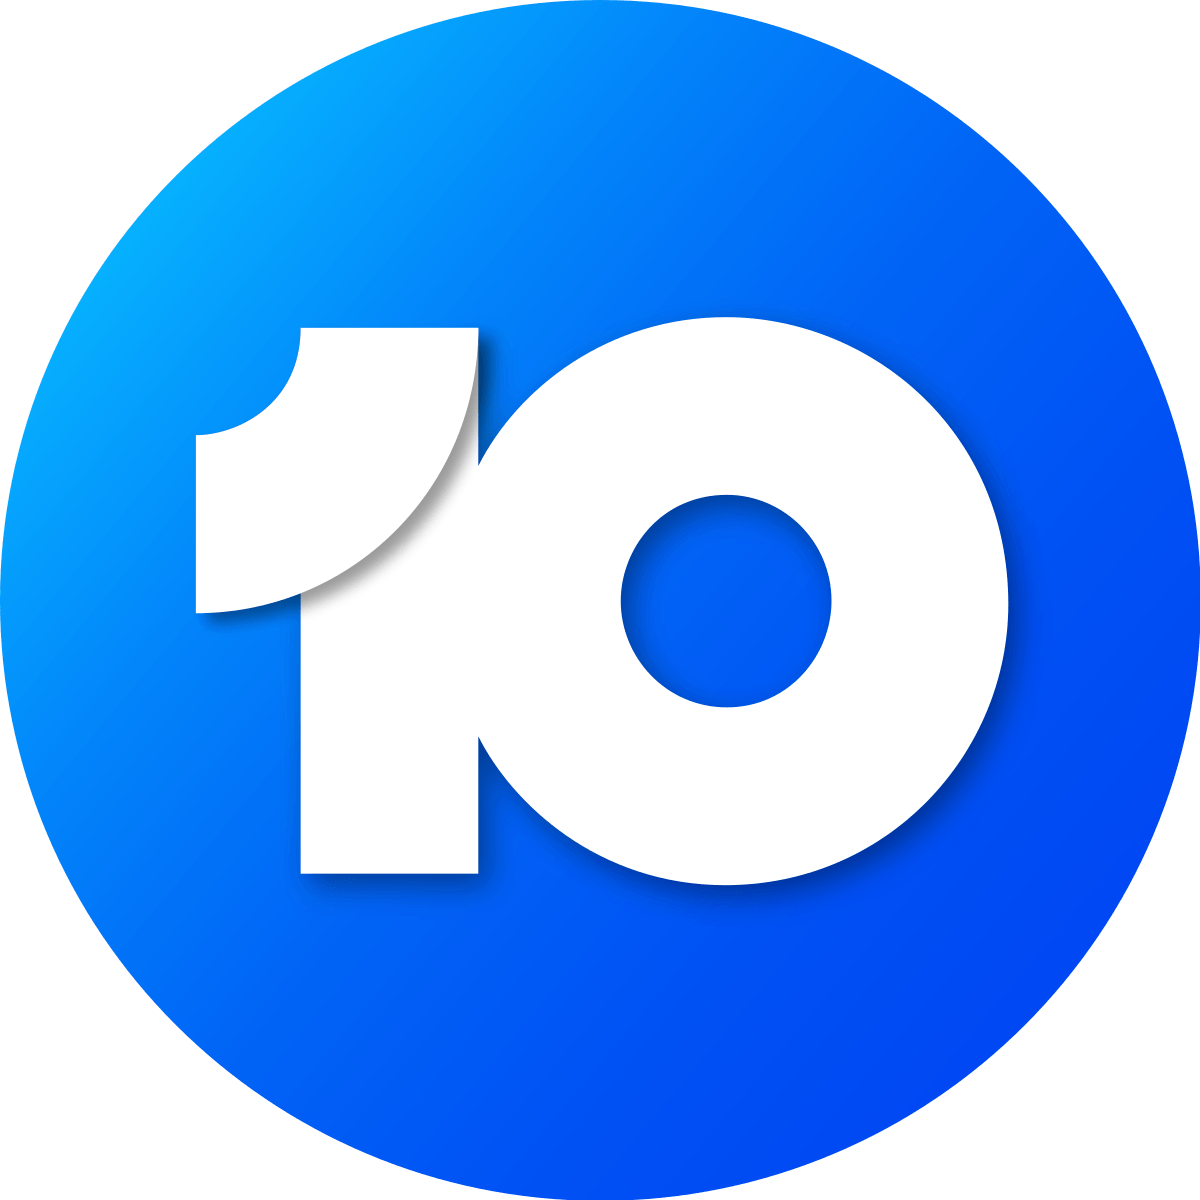 Australian Based Media Company Logo - Network Ten